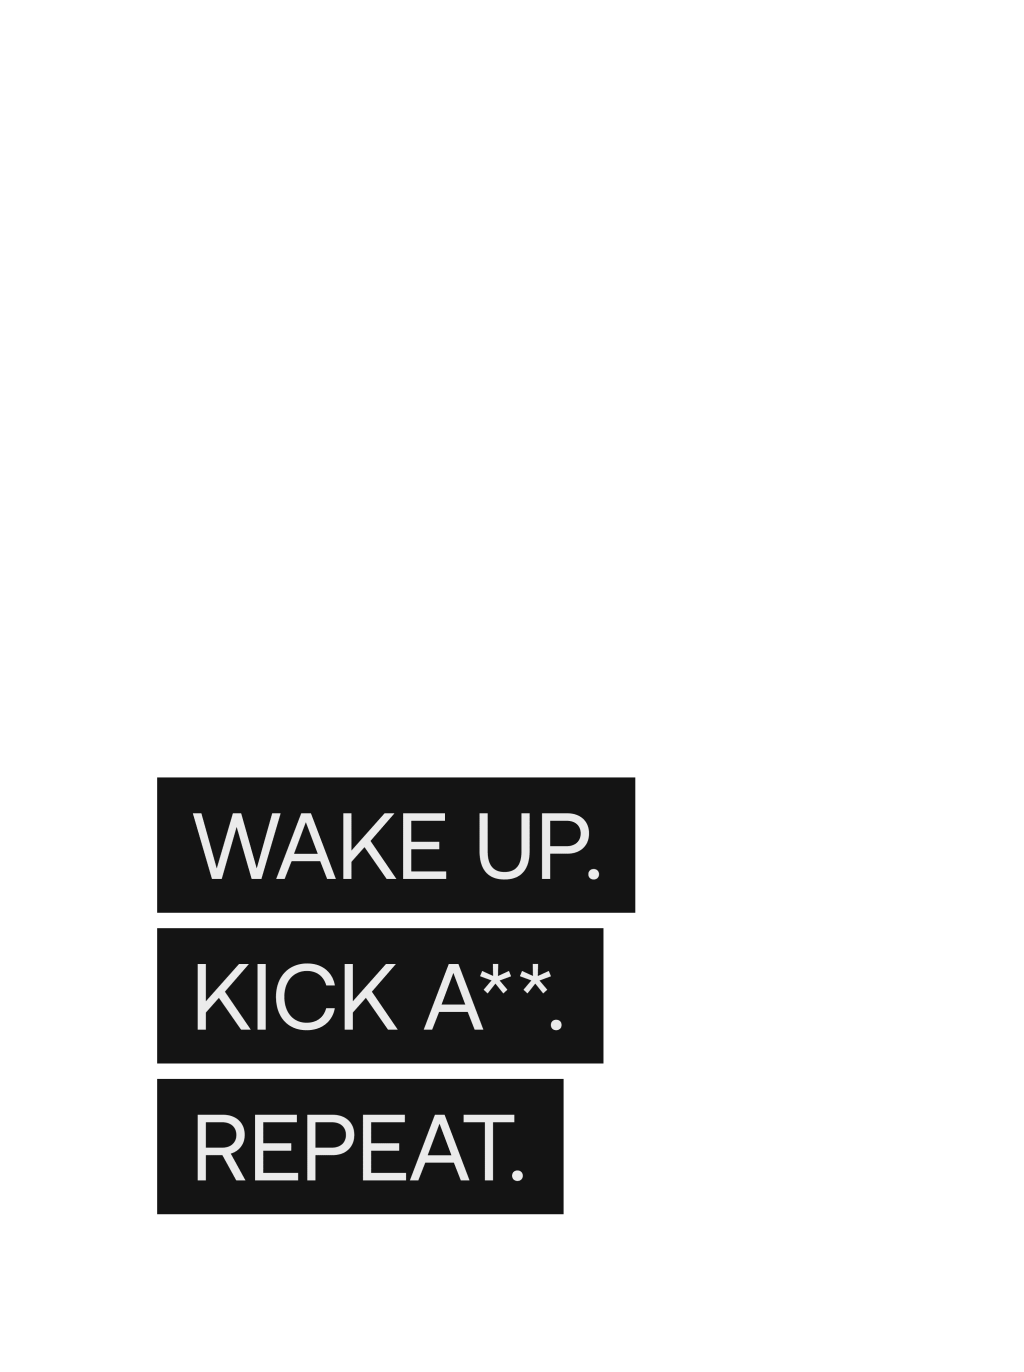 Wake up. Kick ass. Repeat. poster